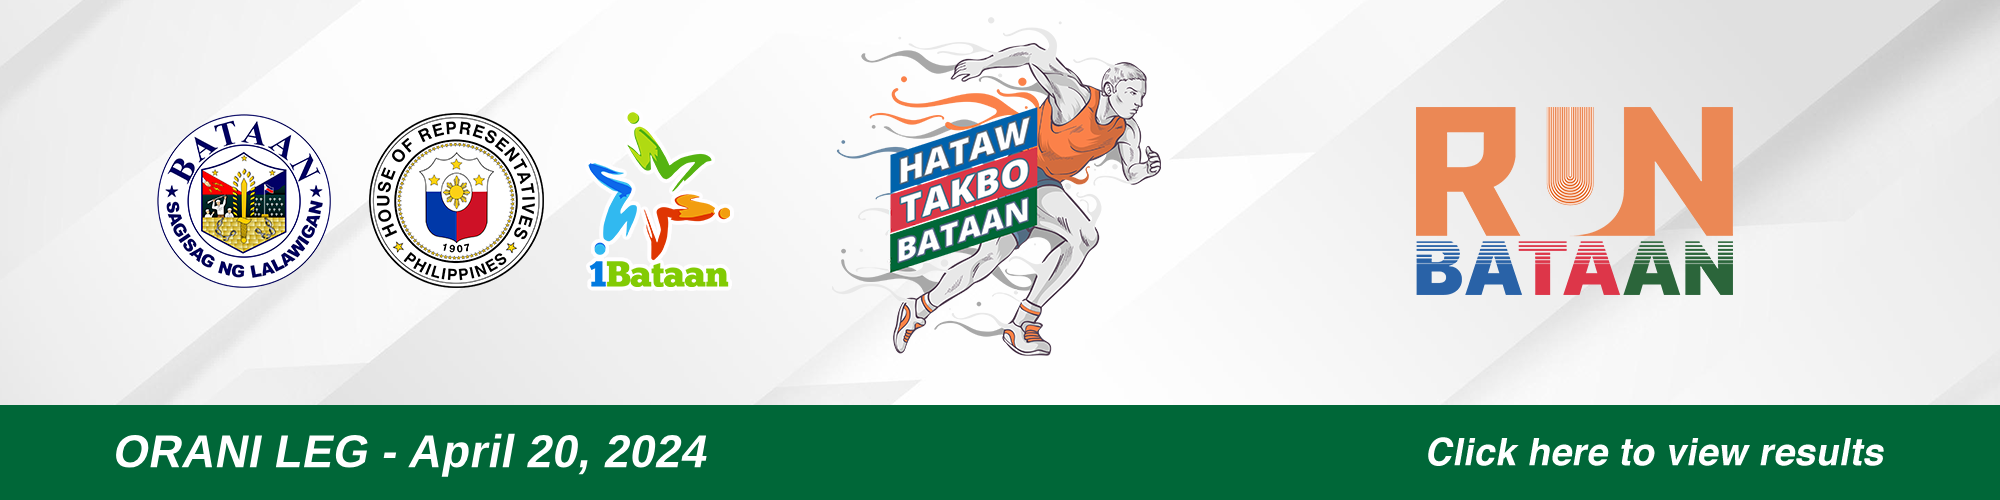 Hataw Takbo Bataan 2024 Orani Leg